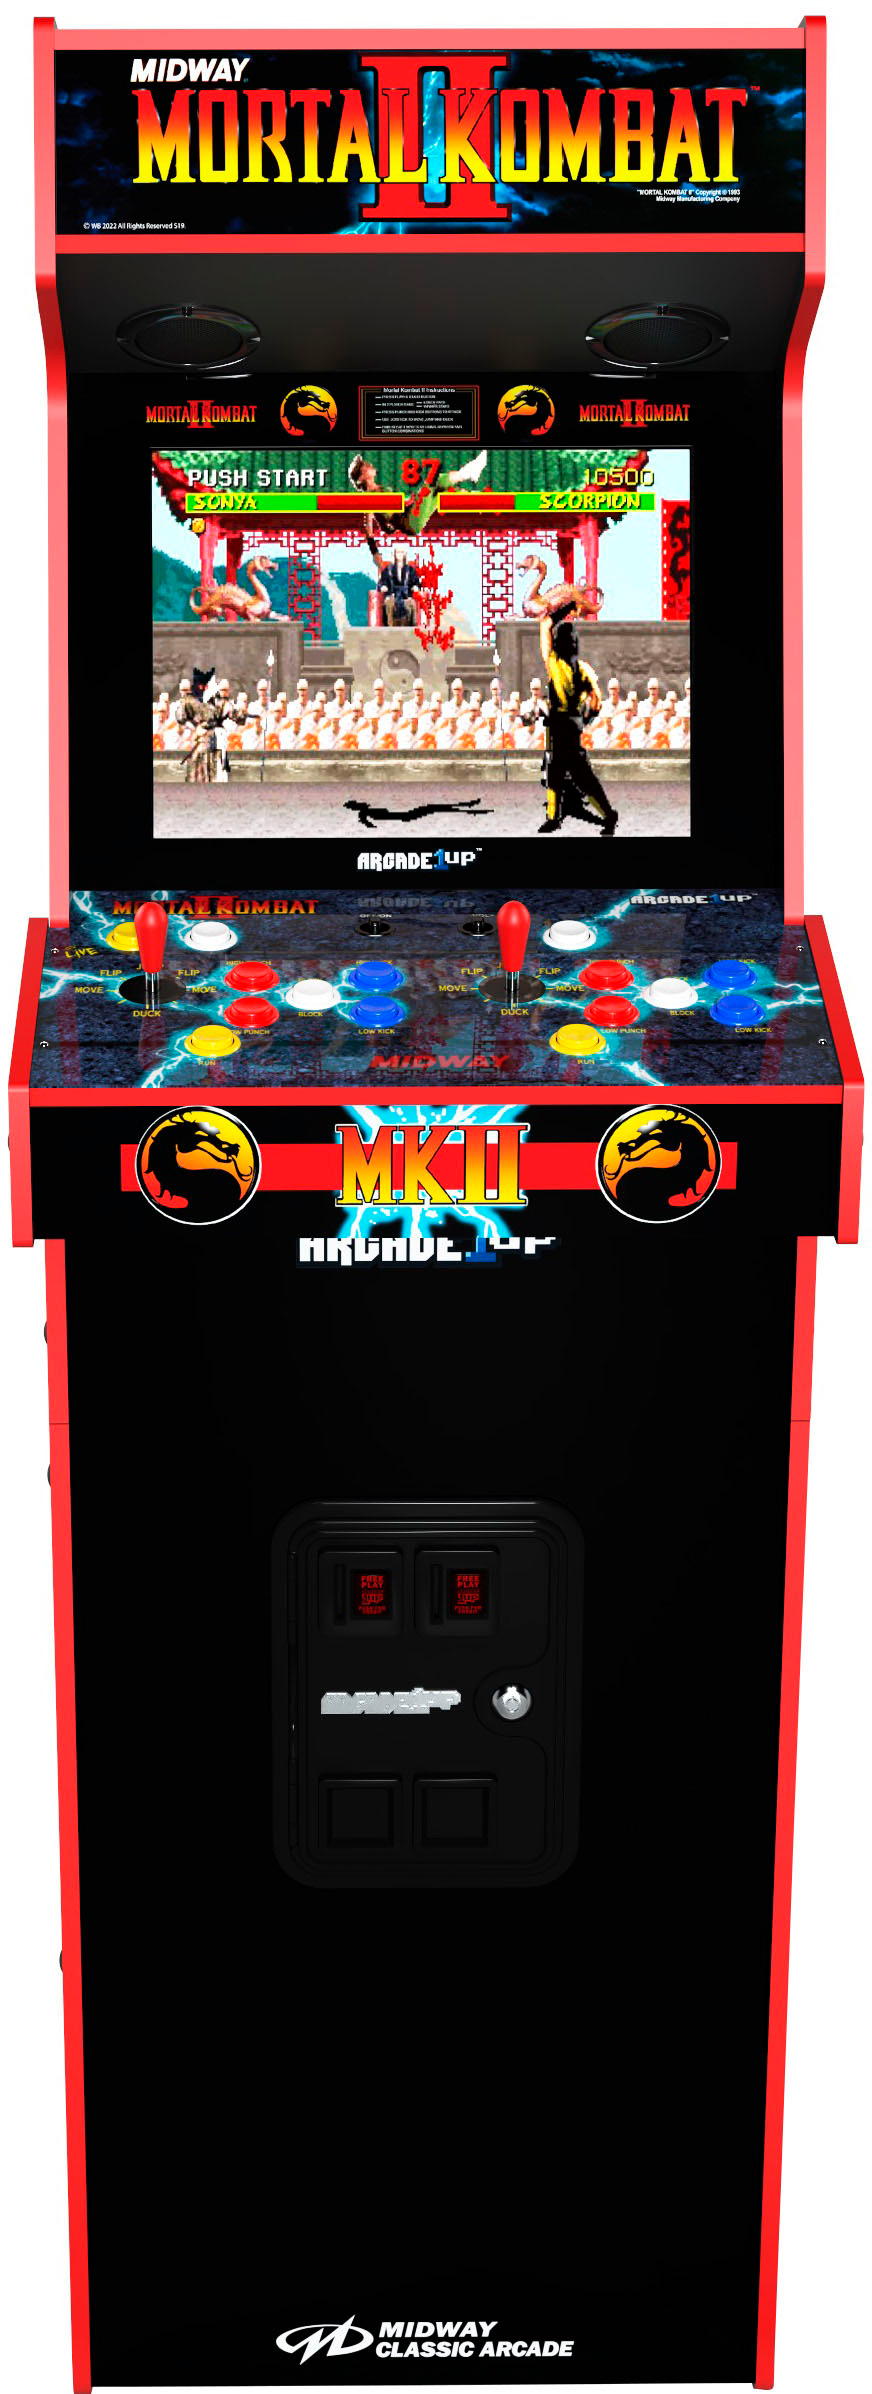 Best Buy: Arcade1Up Marvel vs Capcom Arcade Multi 815221022720